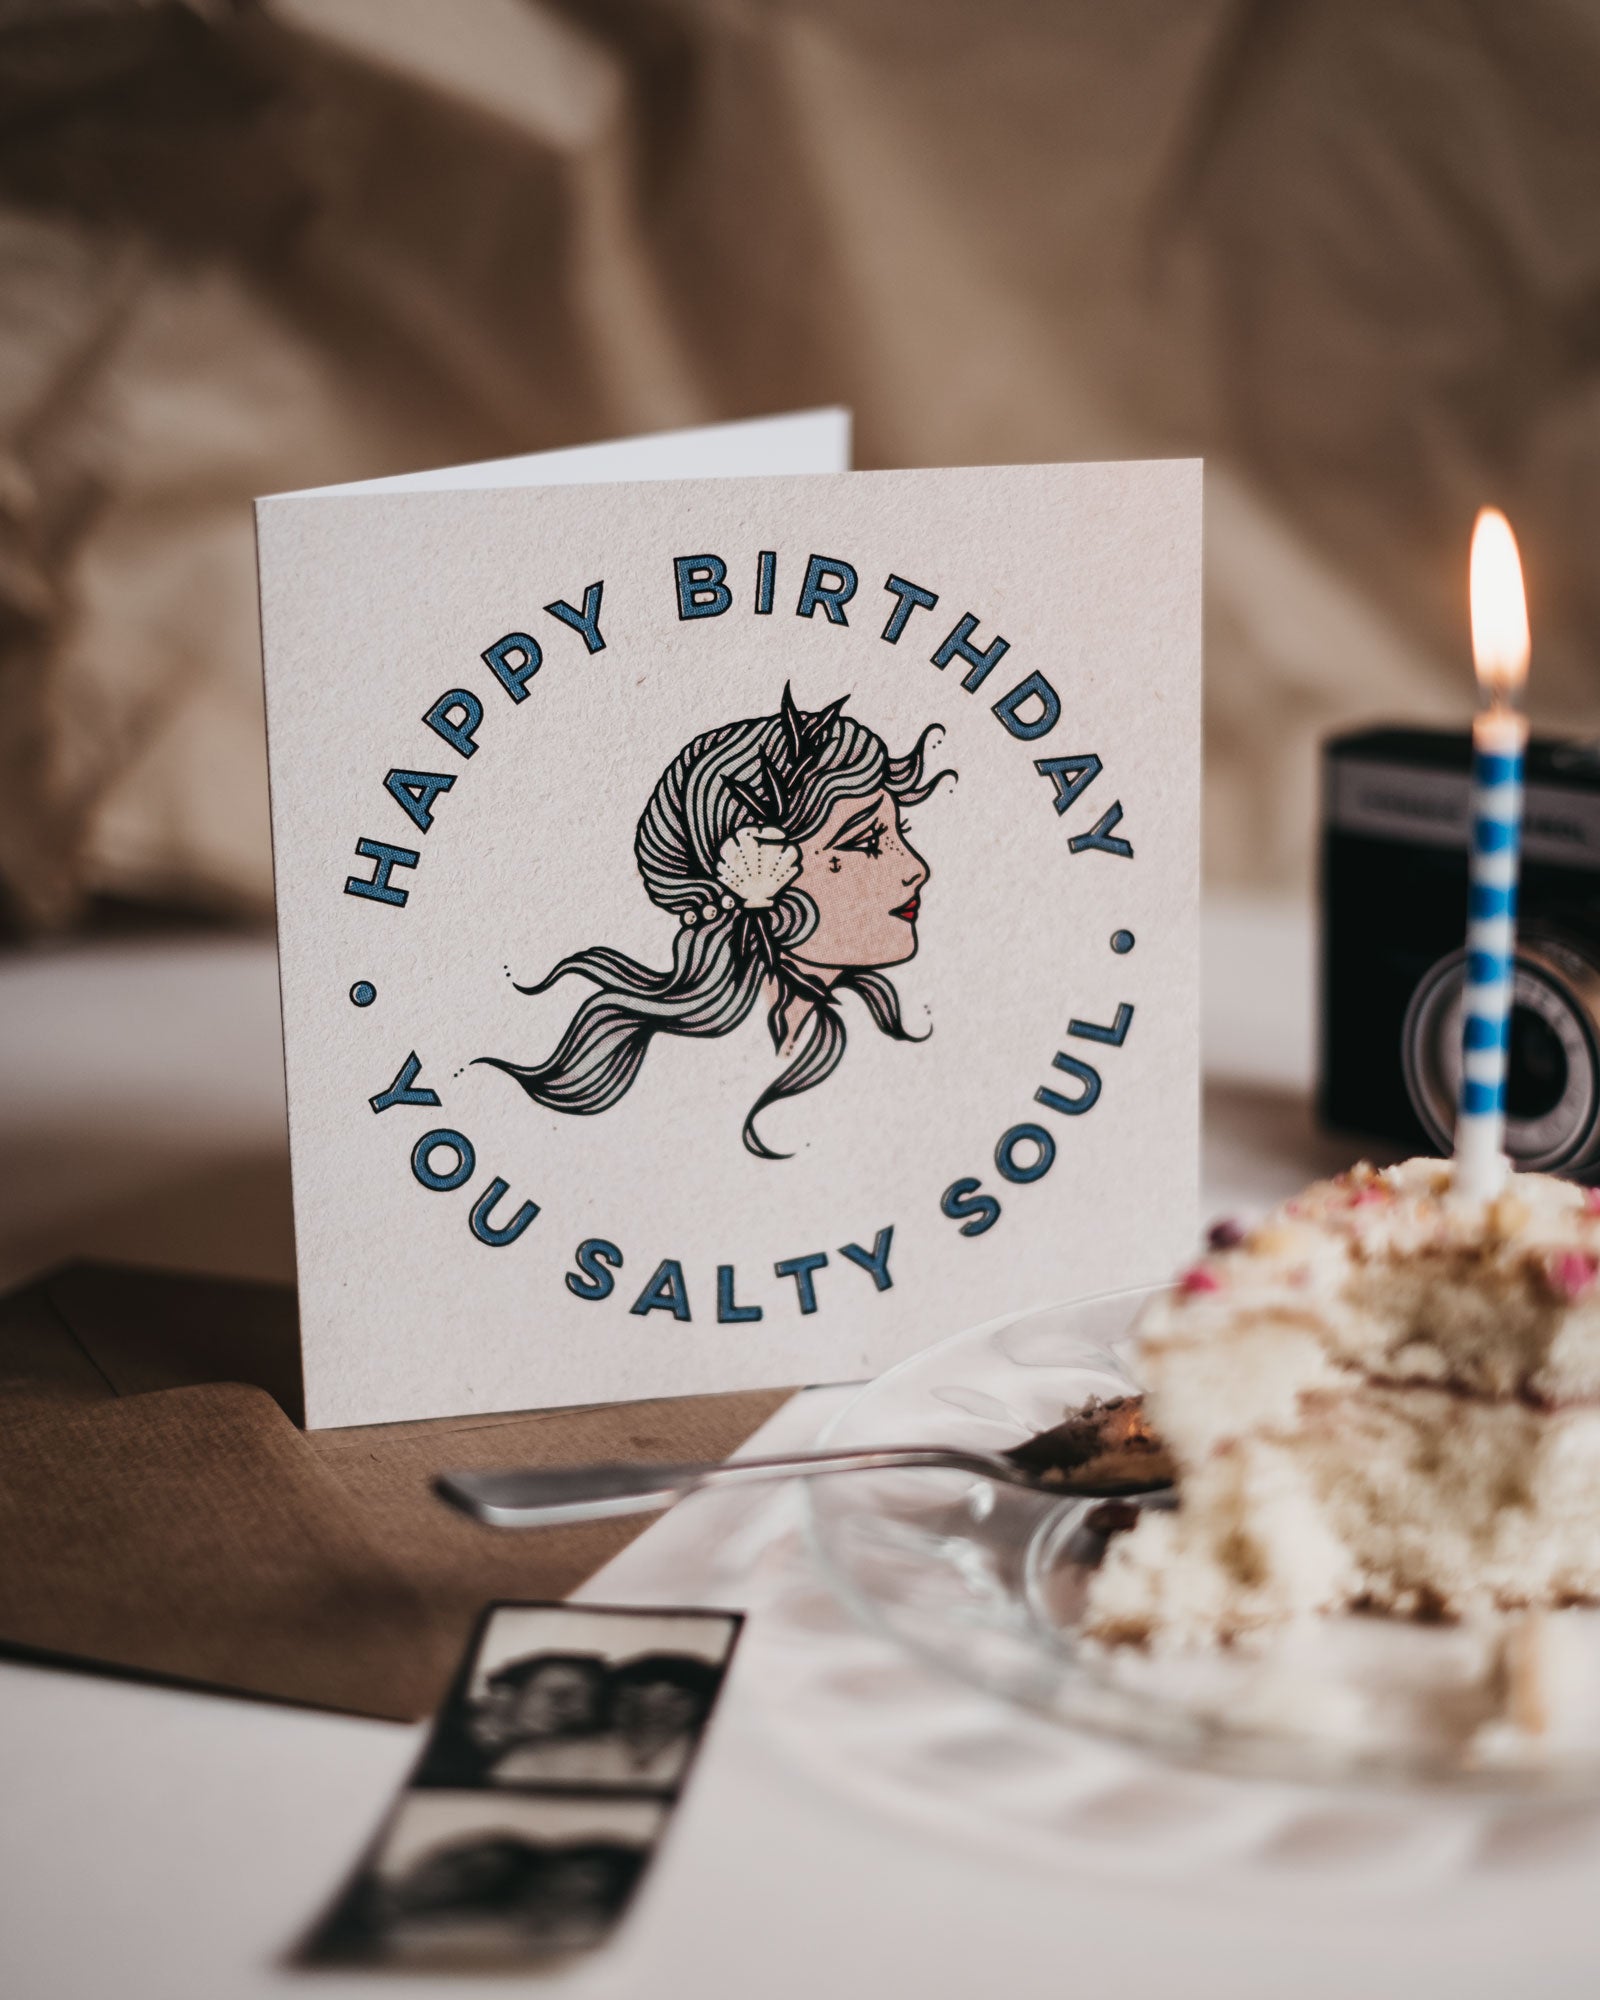 Happy Birthday You Salty Soul Greetings Card by ART DISCO Original Goods